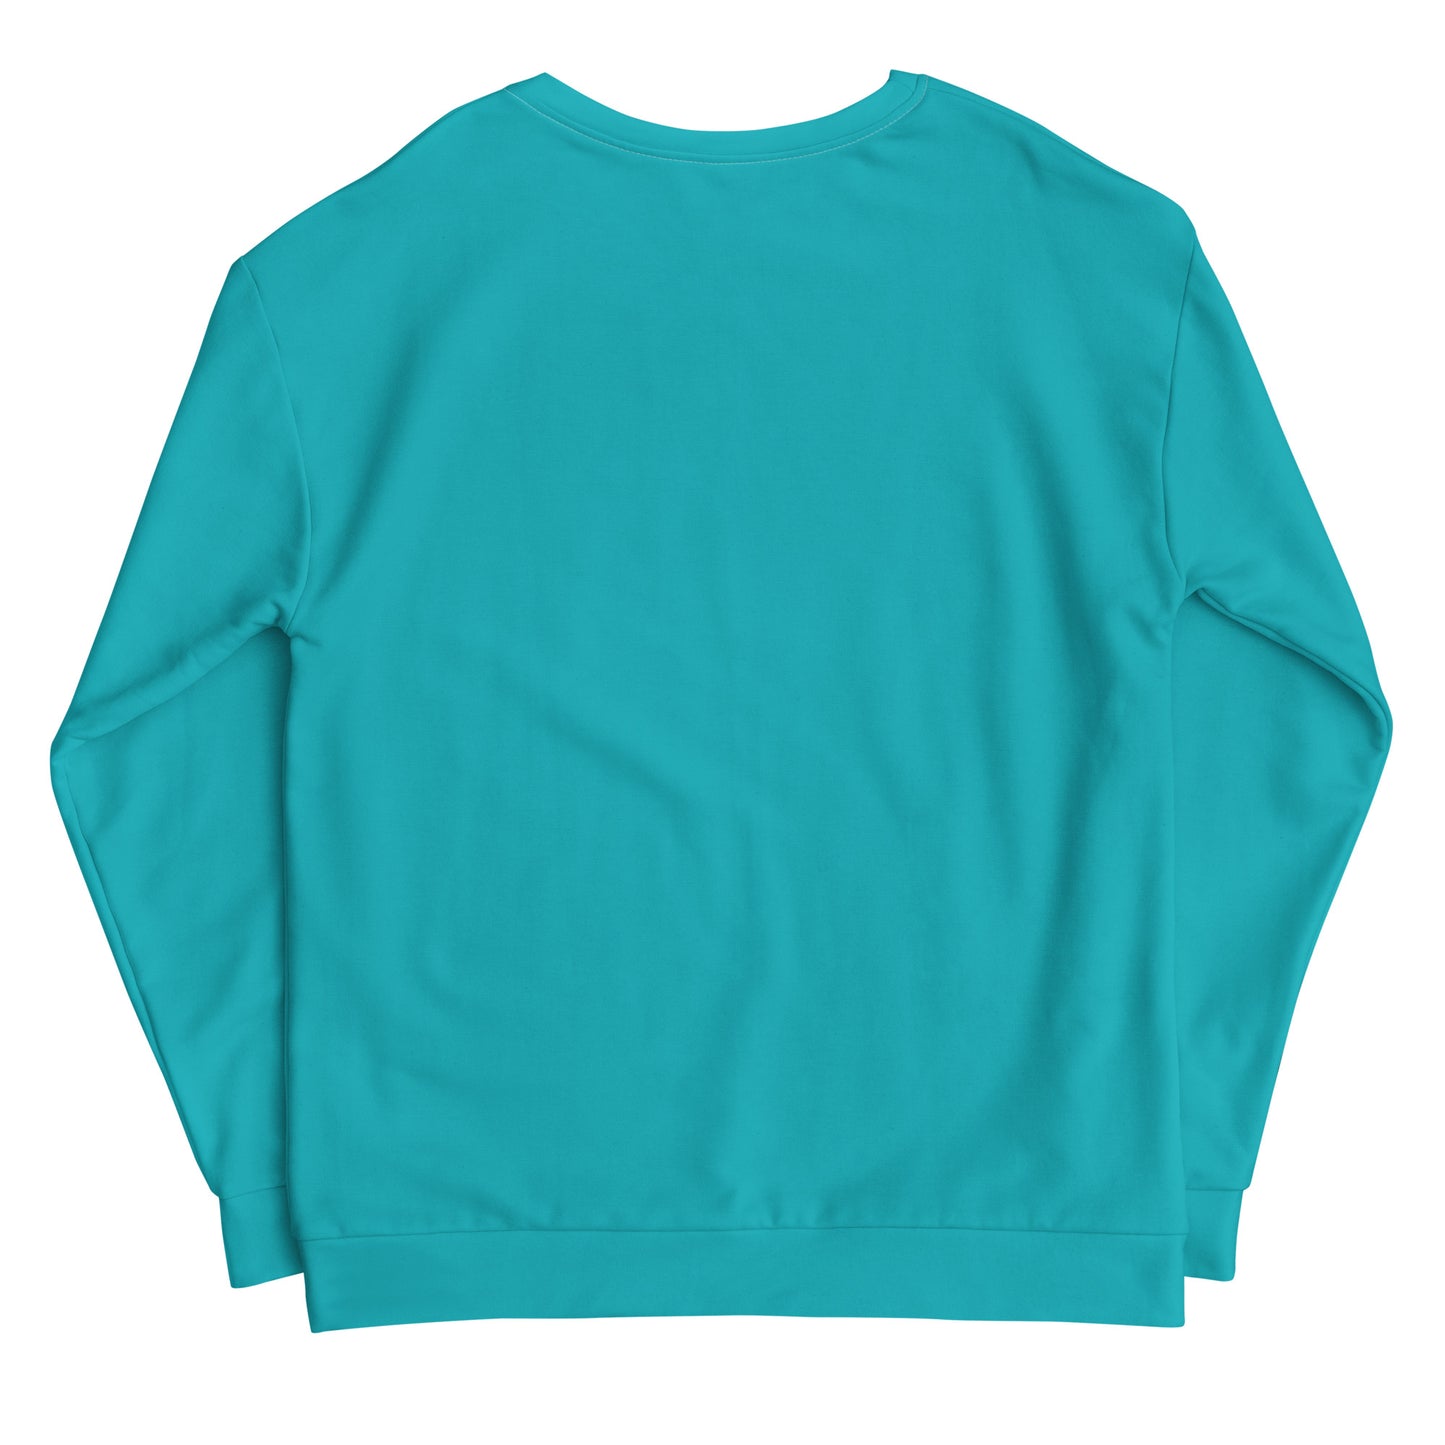 Cyan Climate Change Global Warming Statement - Sustainably Made Sweatshirt